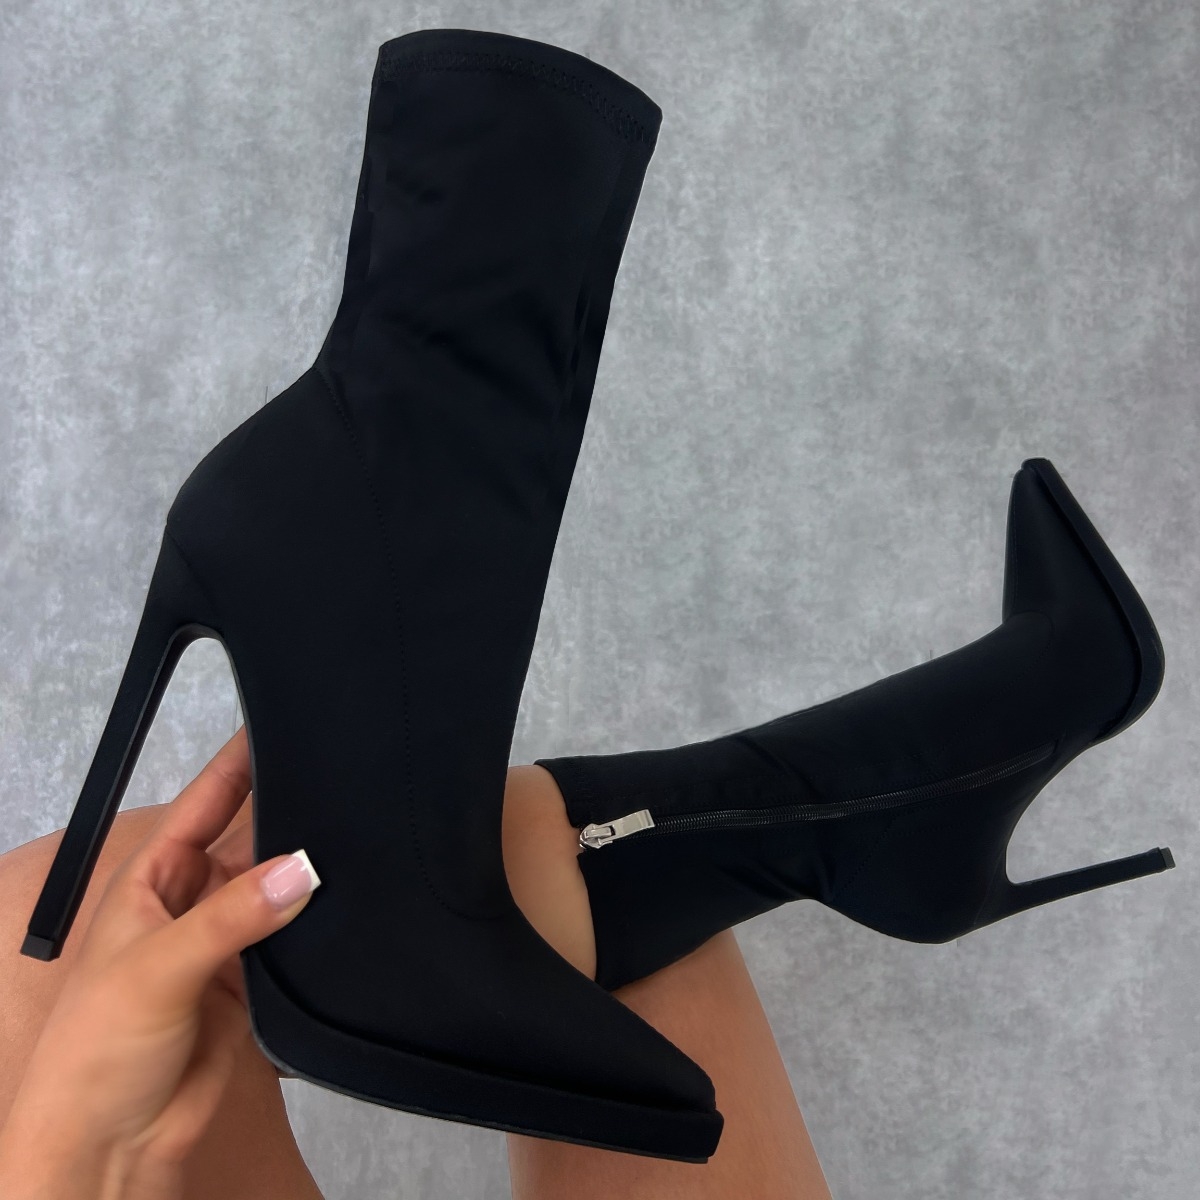 Stefania Black Patent Metal Toe Cap Stiletto Ankle Boots | SIMMI London